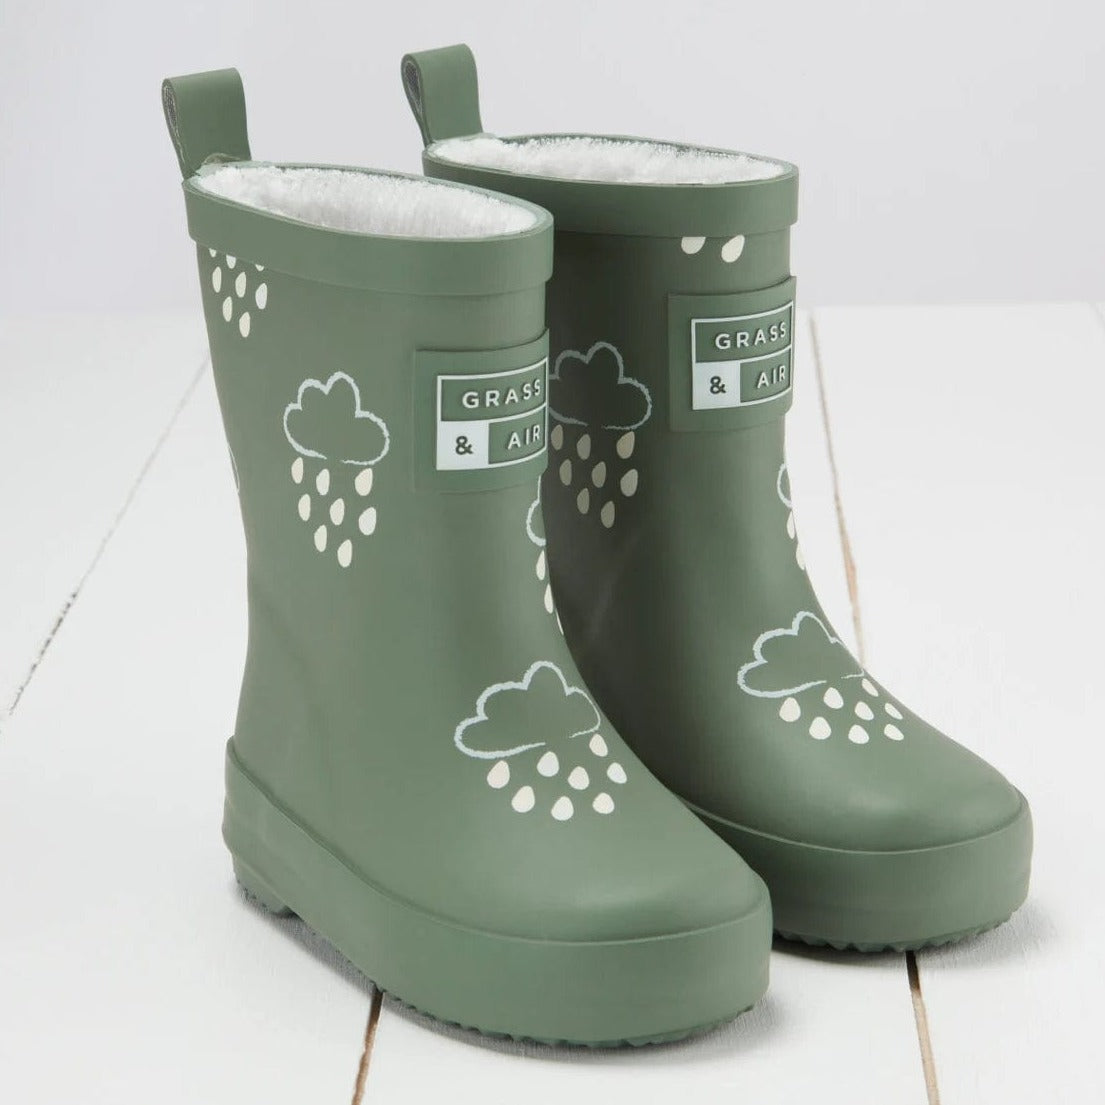 Grass & Air Wellie Boots Kids Khaki Green Colour Changing Wellies